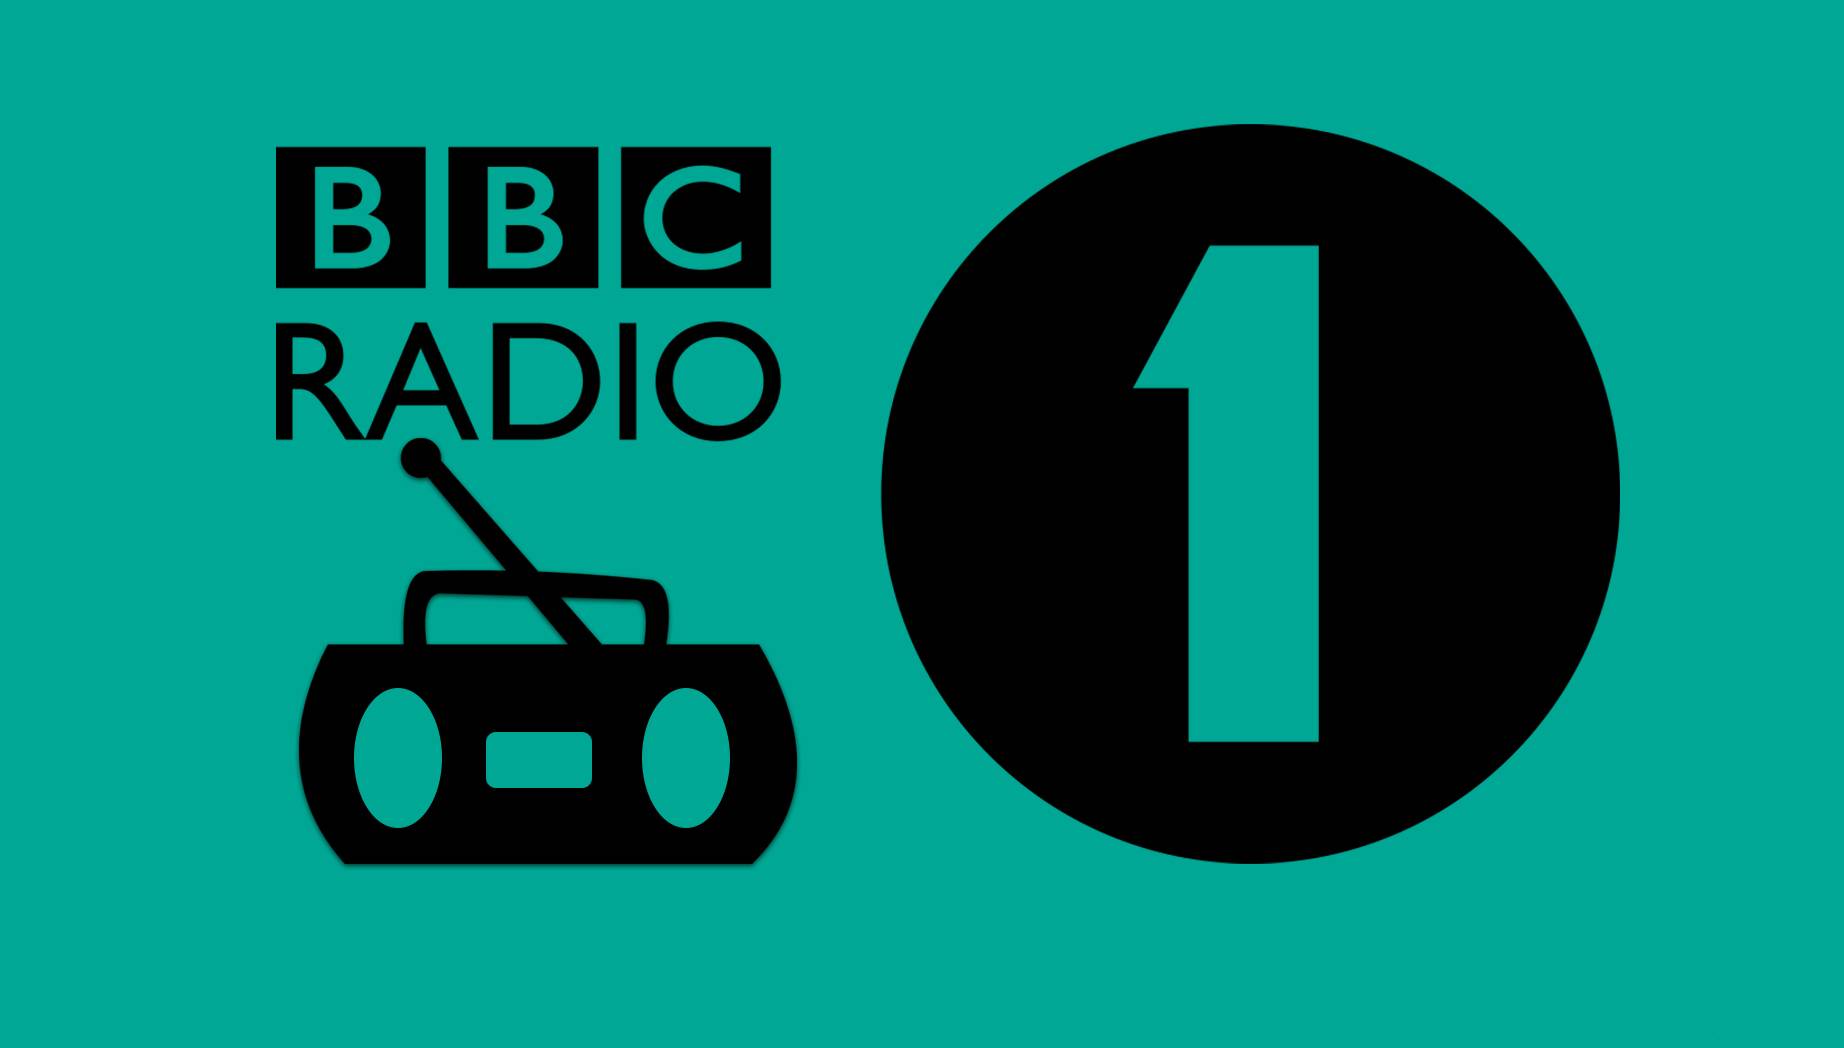 BBC radio one